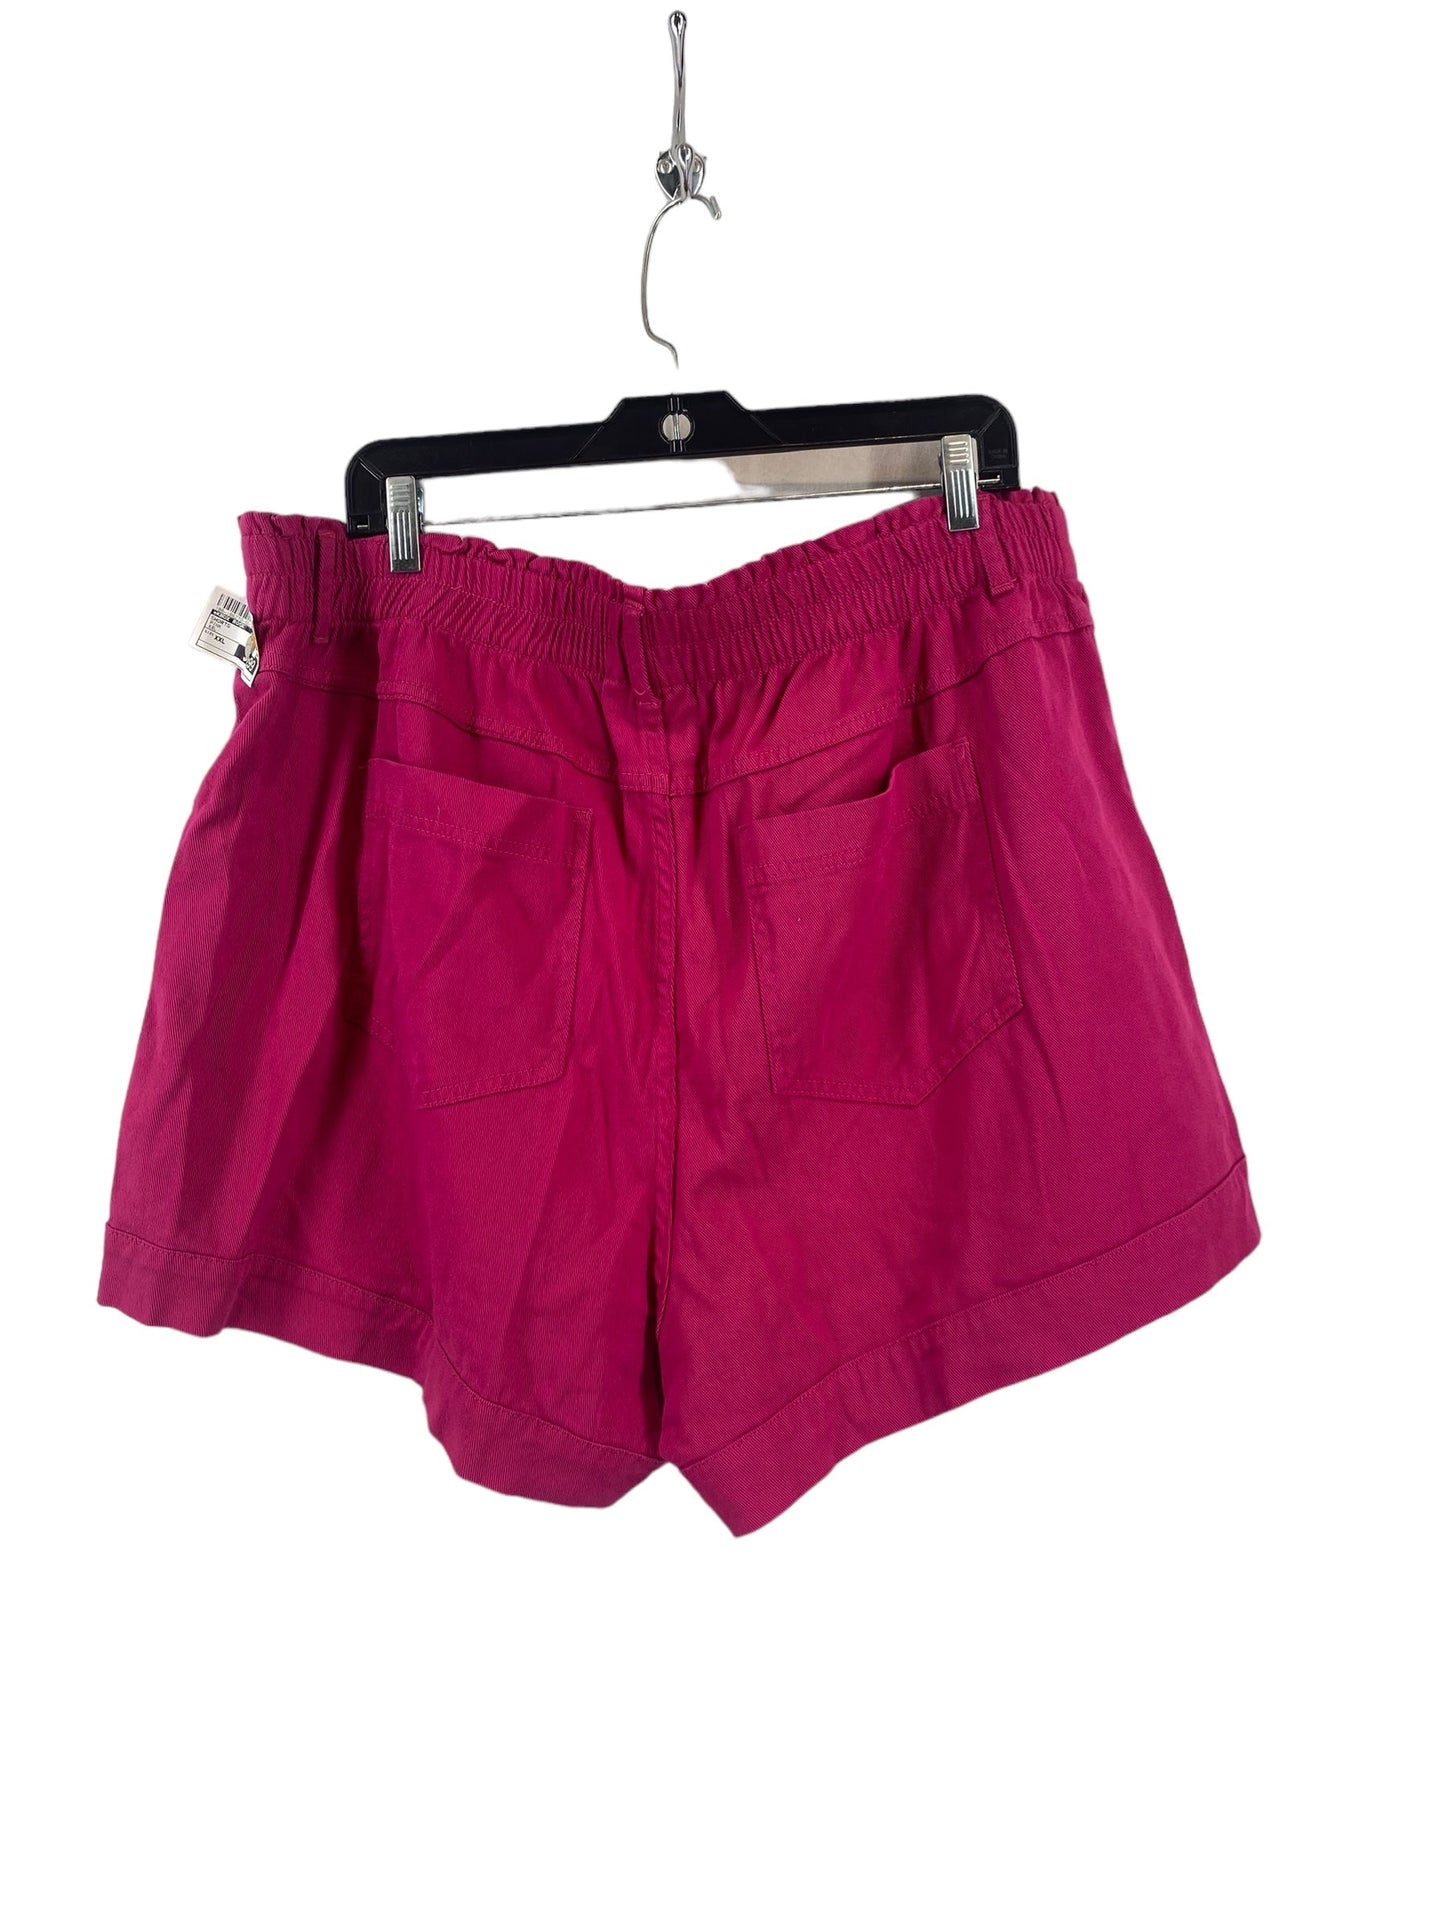 Pink Shorts Knox Rose, Size Xxl